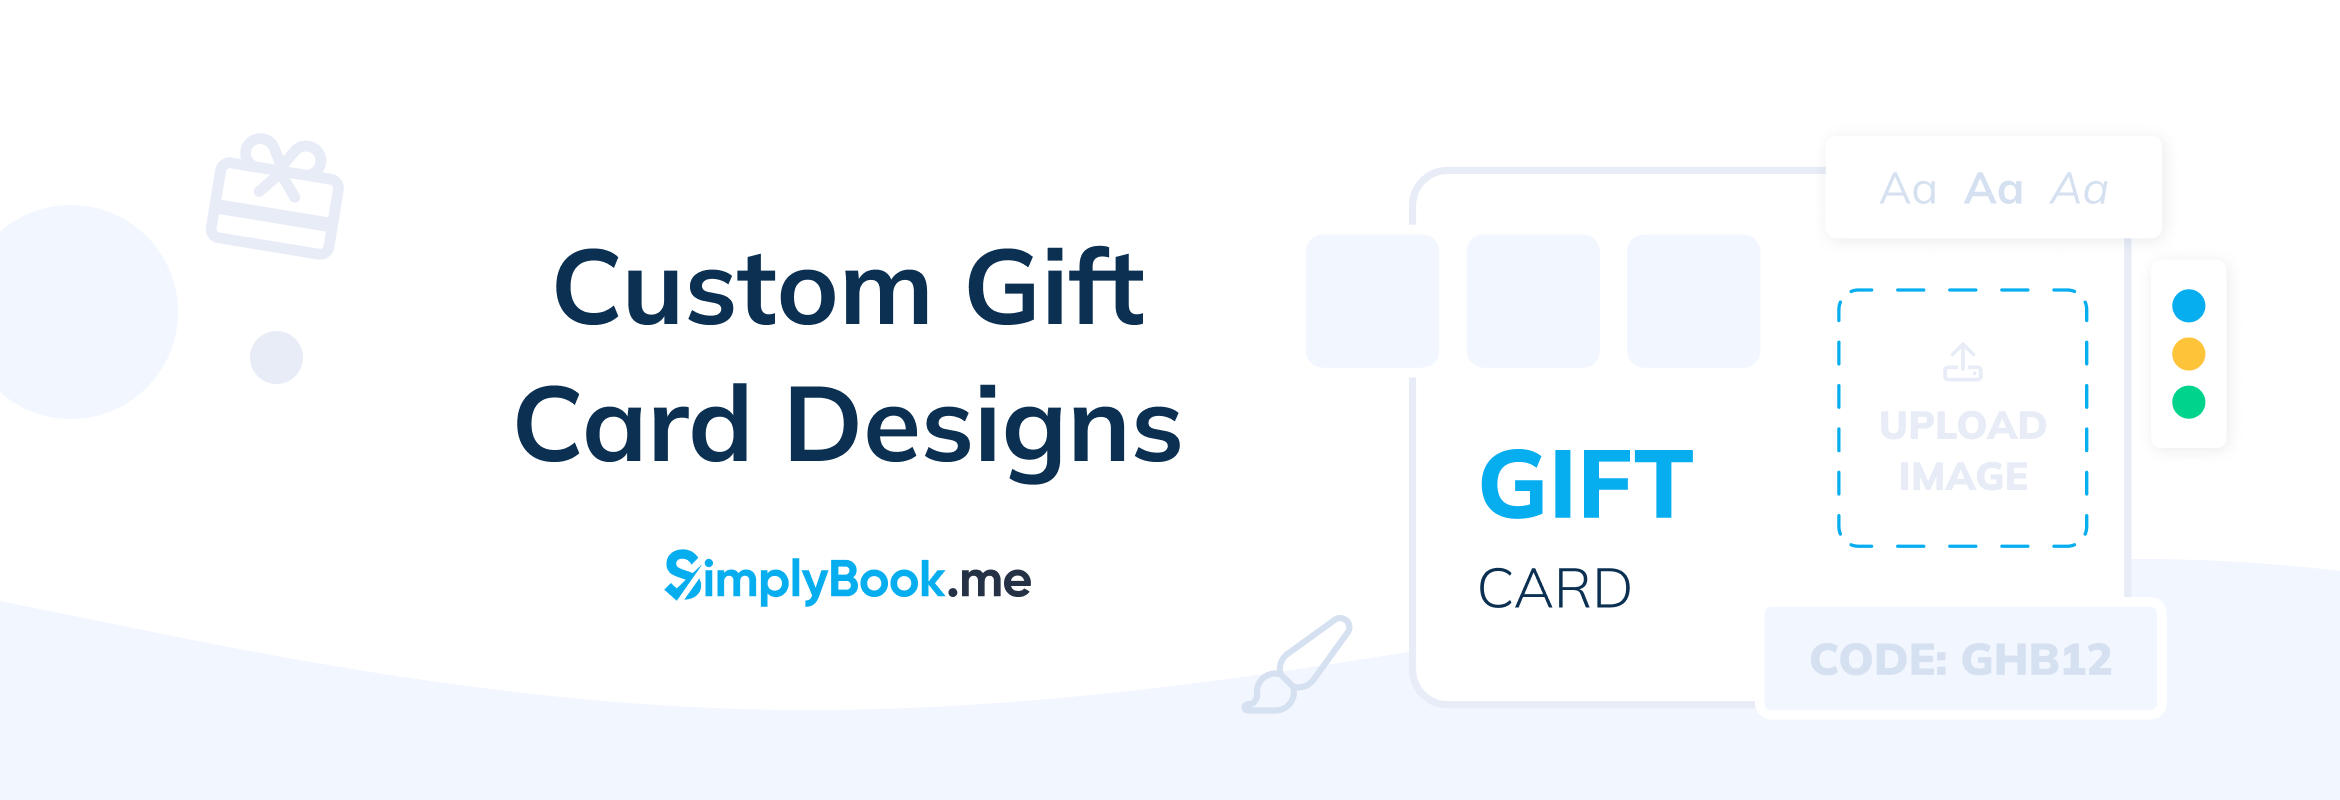 Custom Gift Card Designs